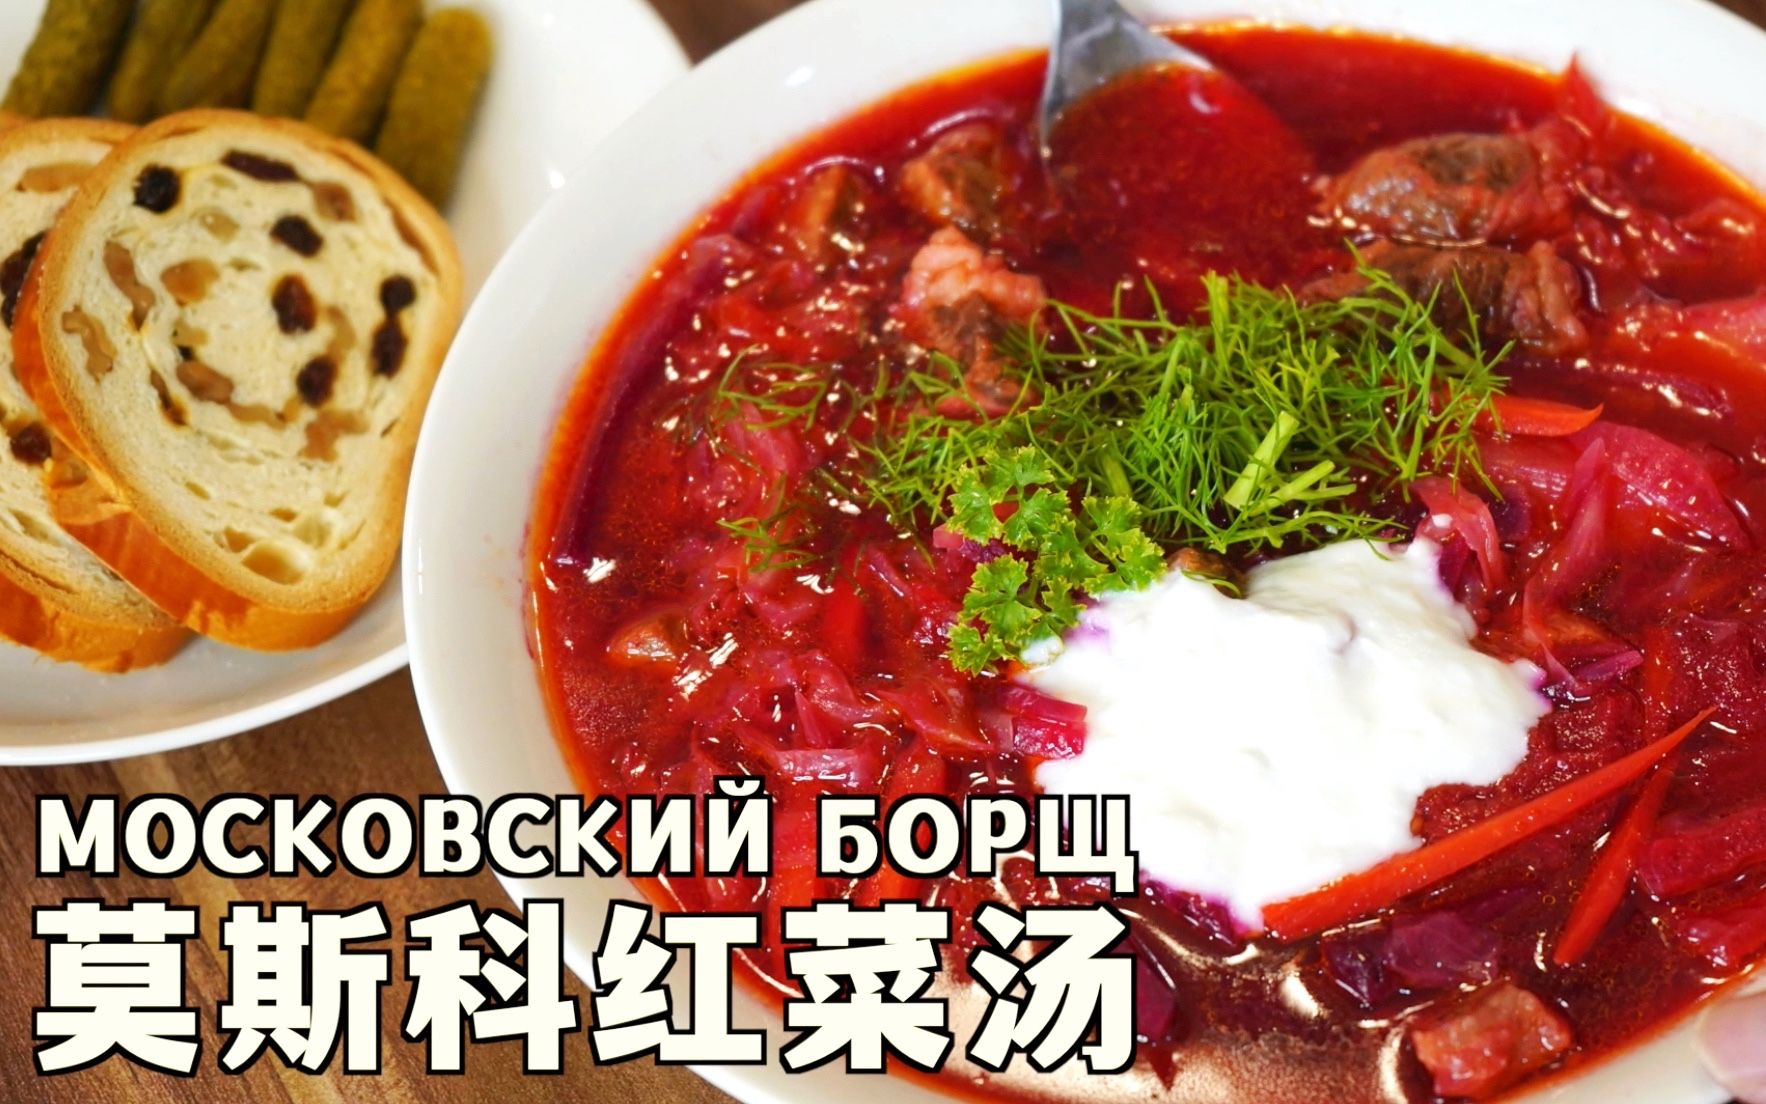 Cucina tipica russa - MUST EAT a San Pietroburgo